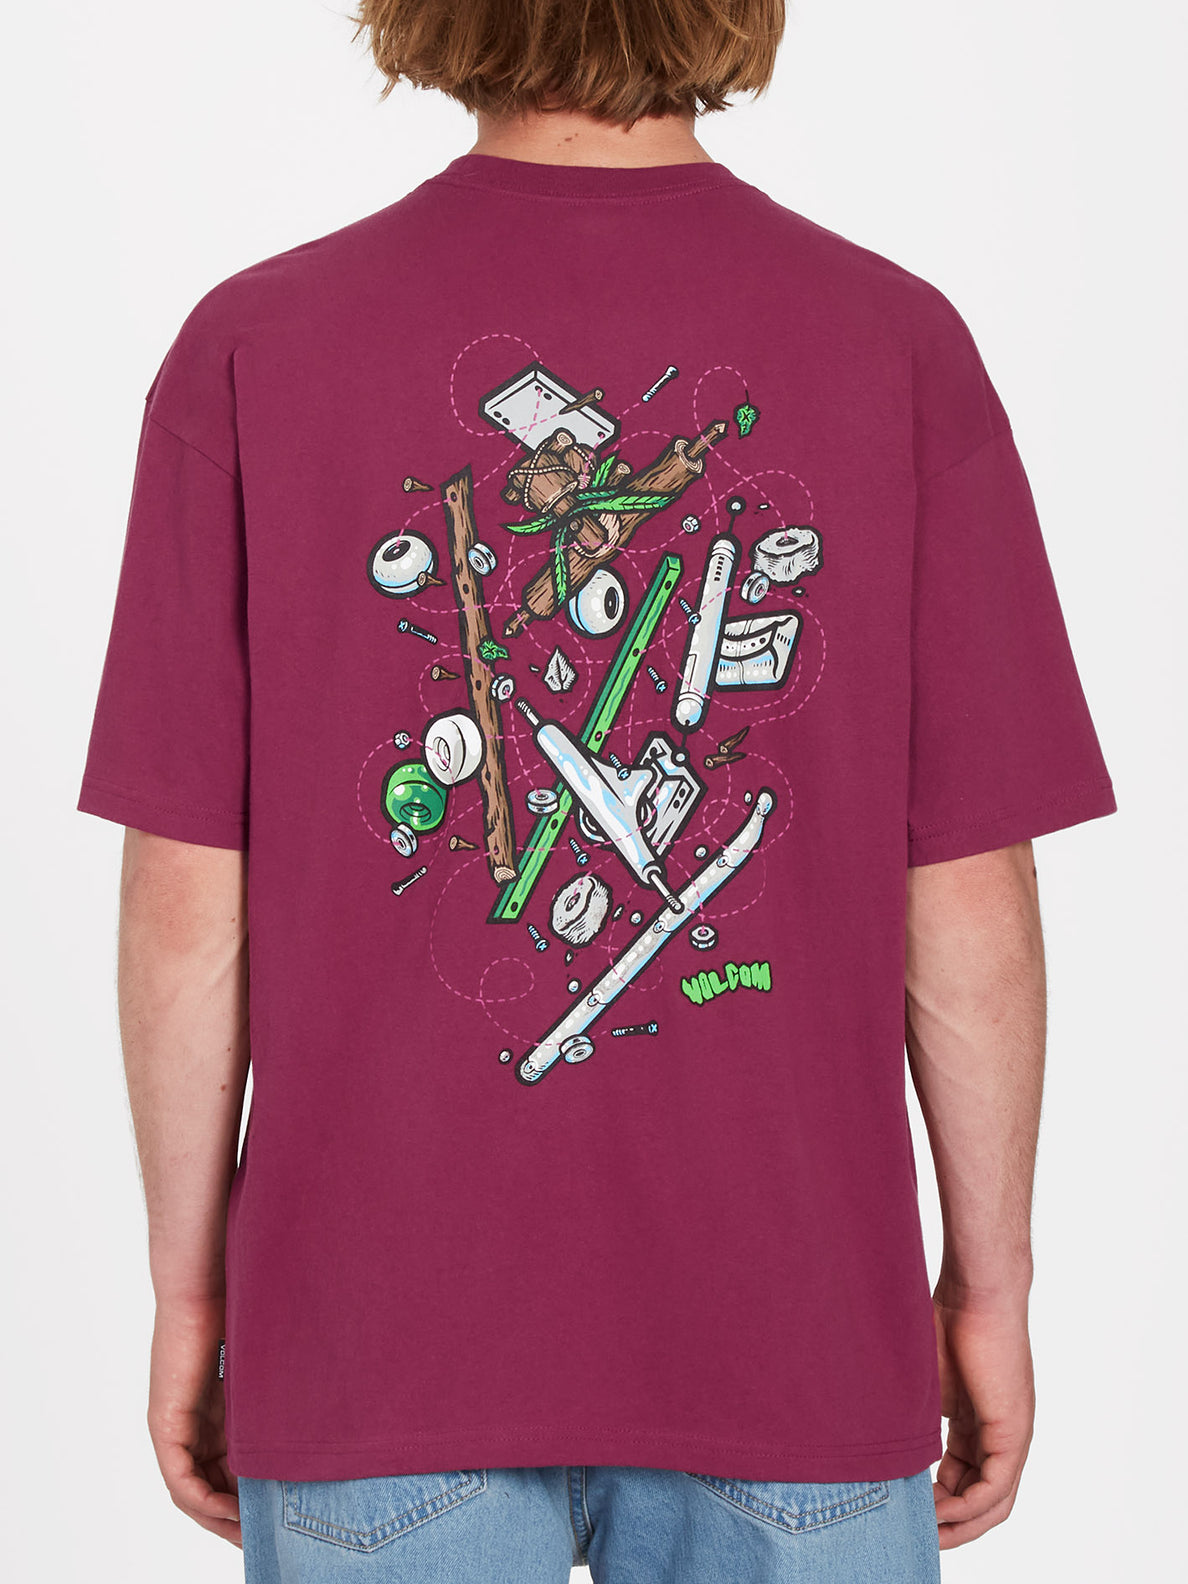 Todd Bratrud 1 T-shirt - PLUM (A5212306_PLM) [B]